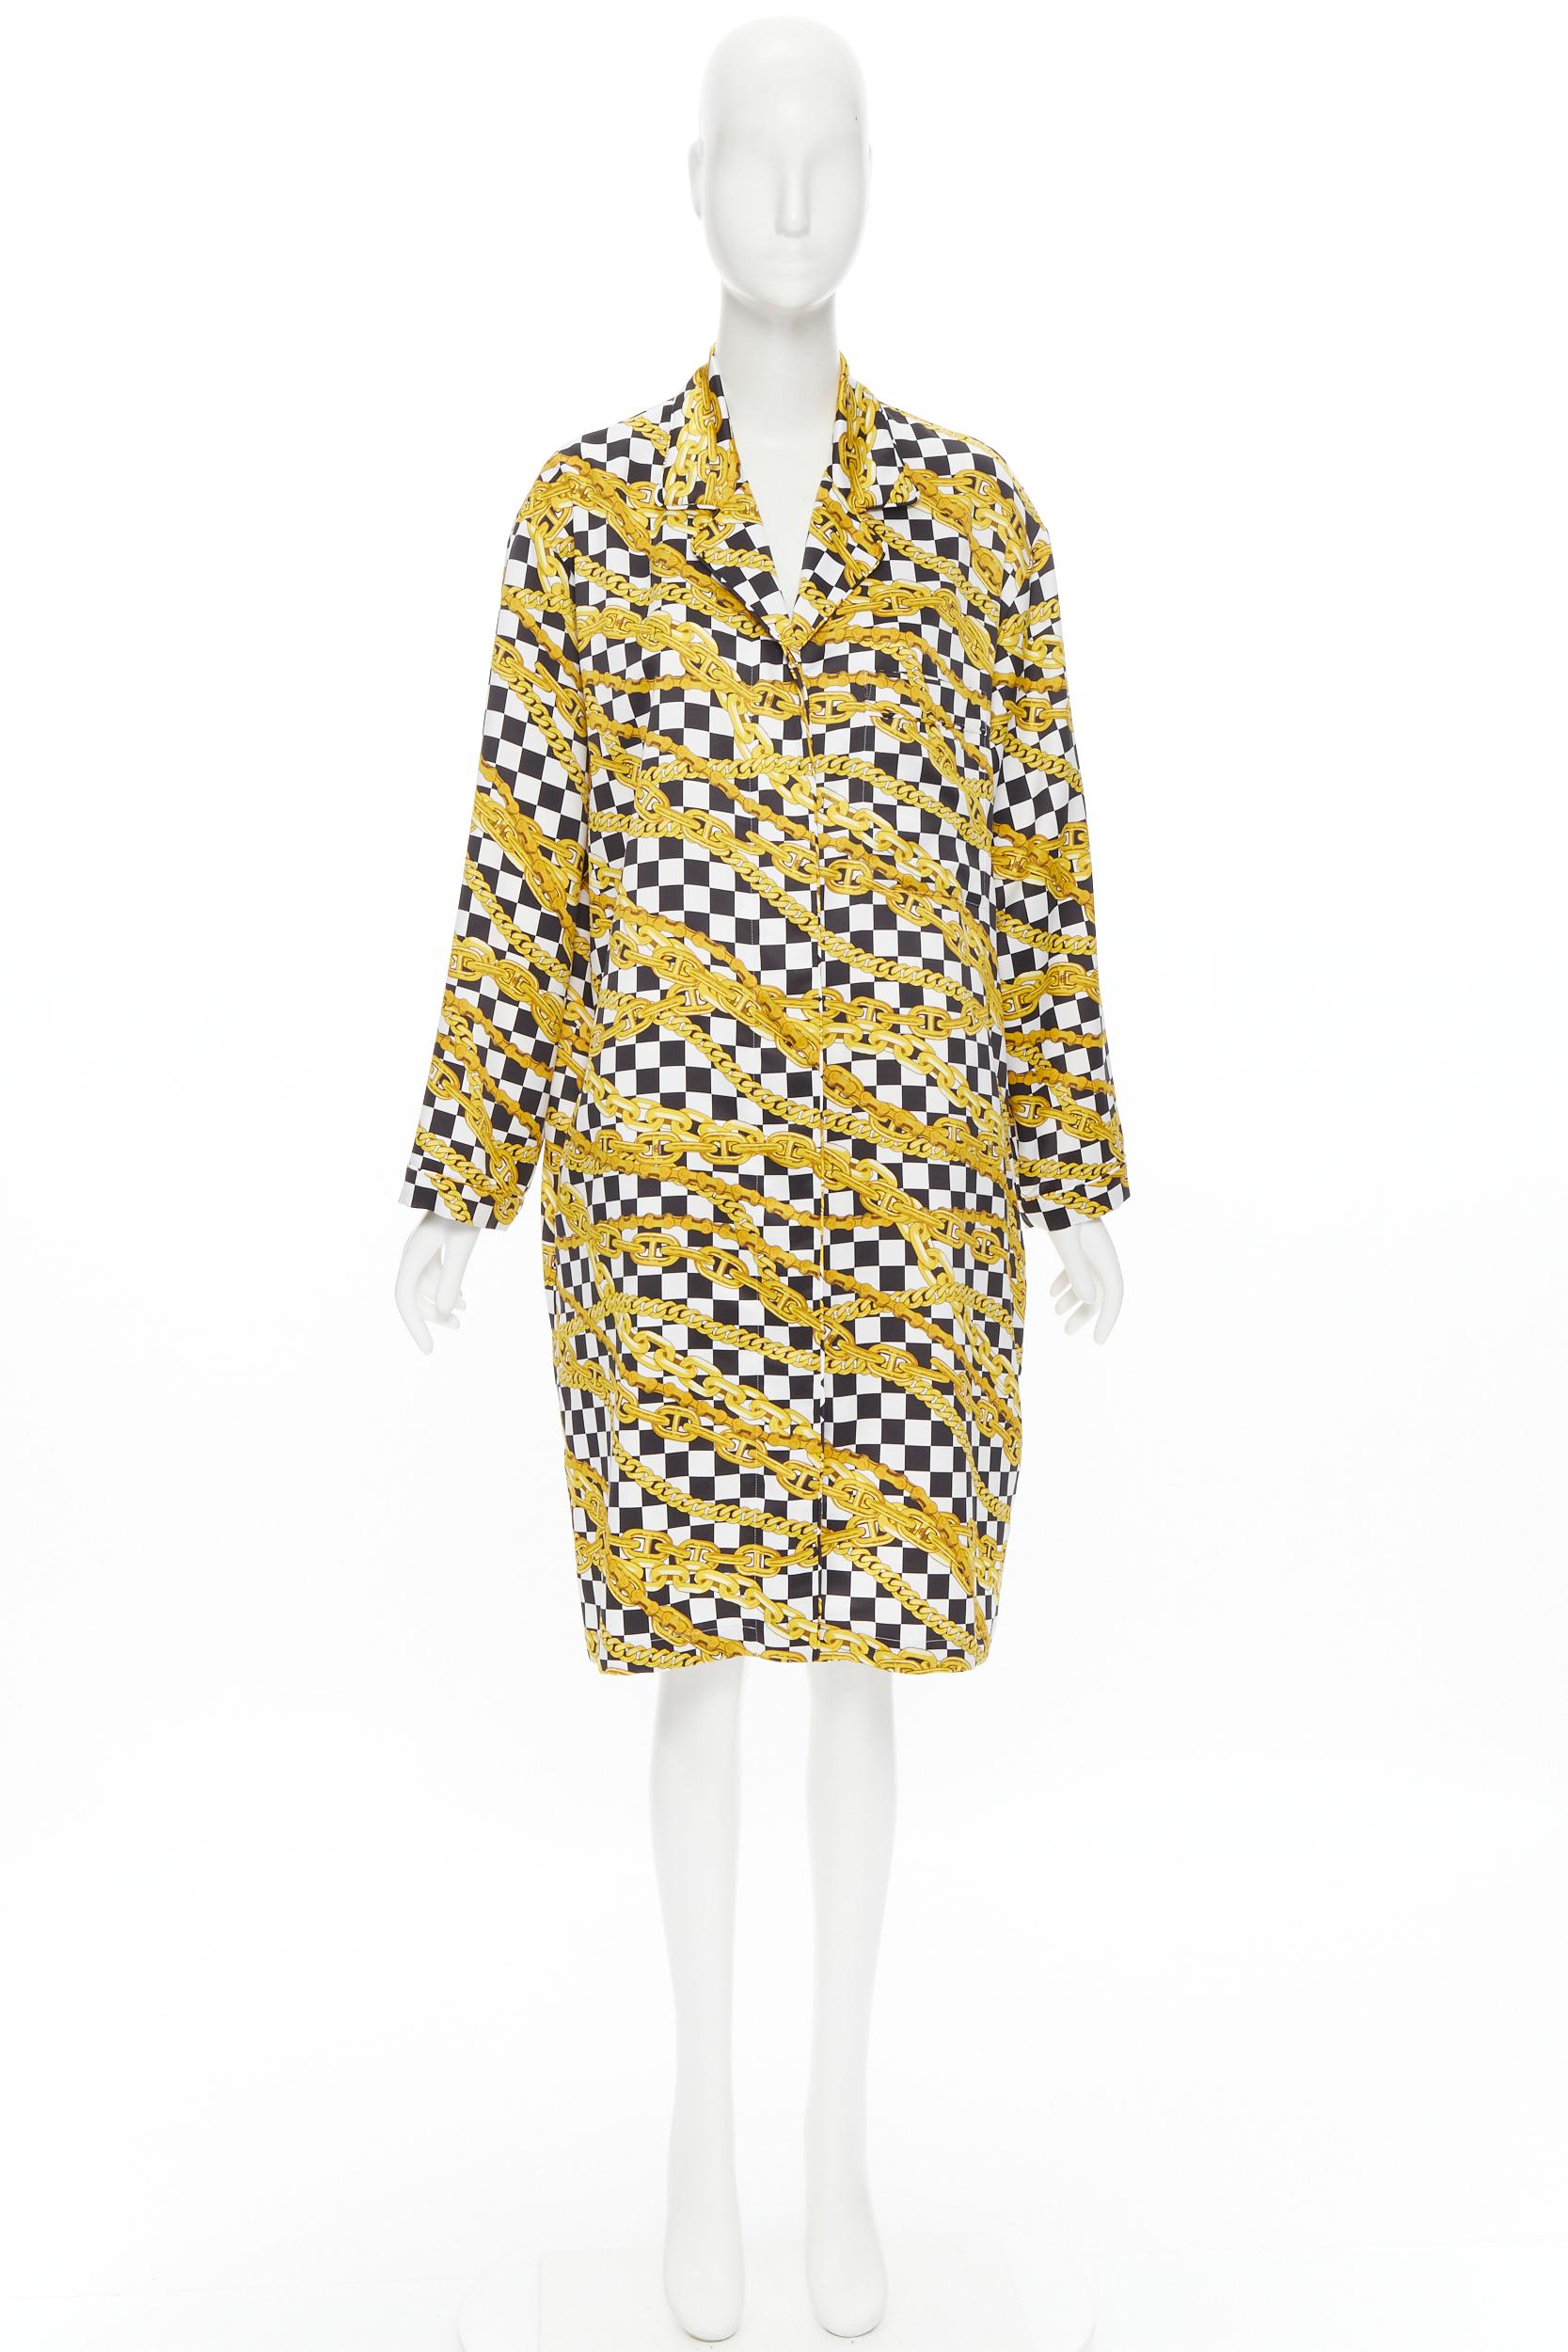 new BALENCIAGA gold vintage chain black white checker shirt dress robe FR38 4